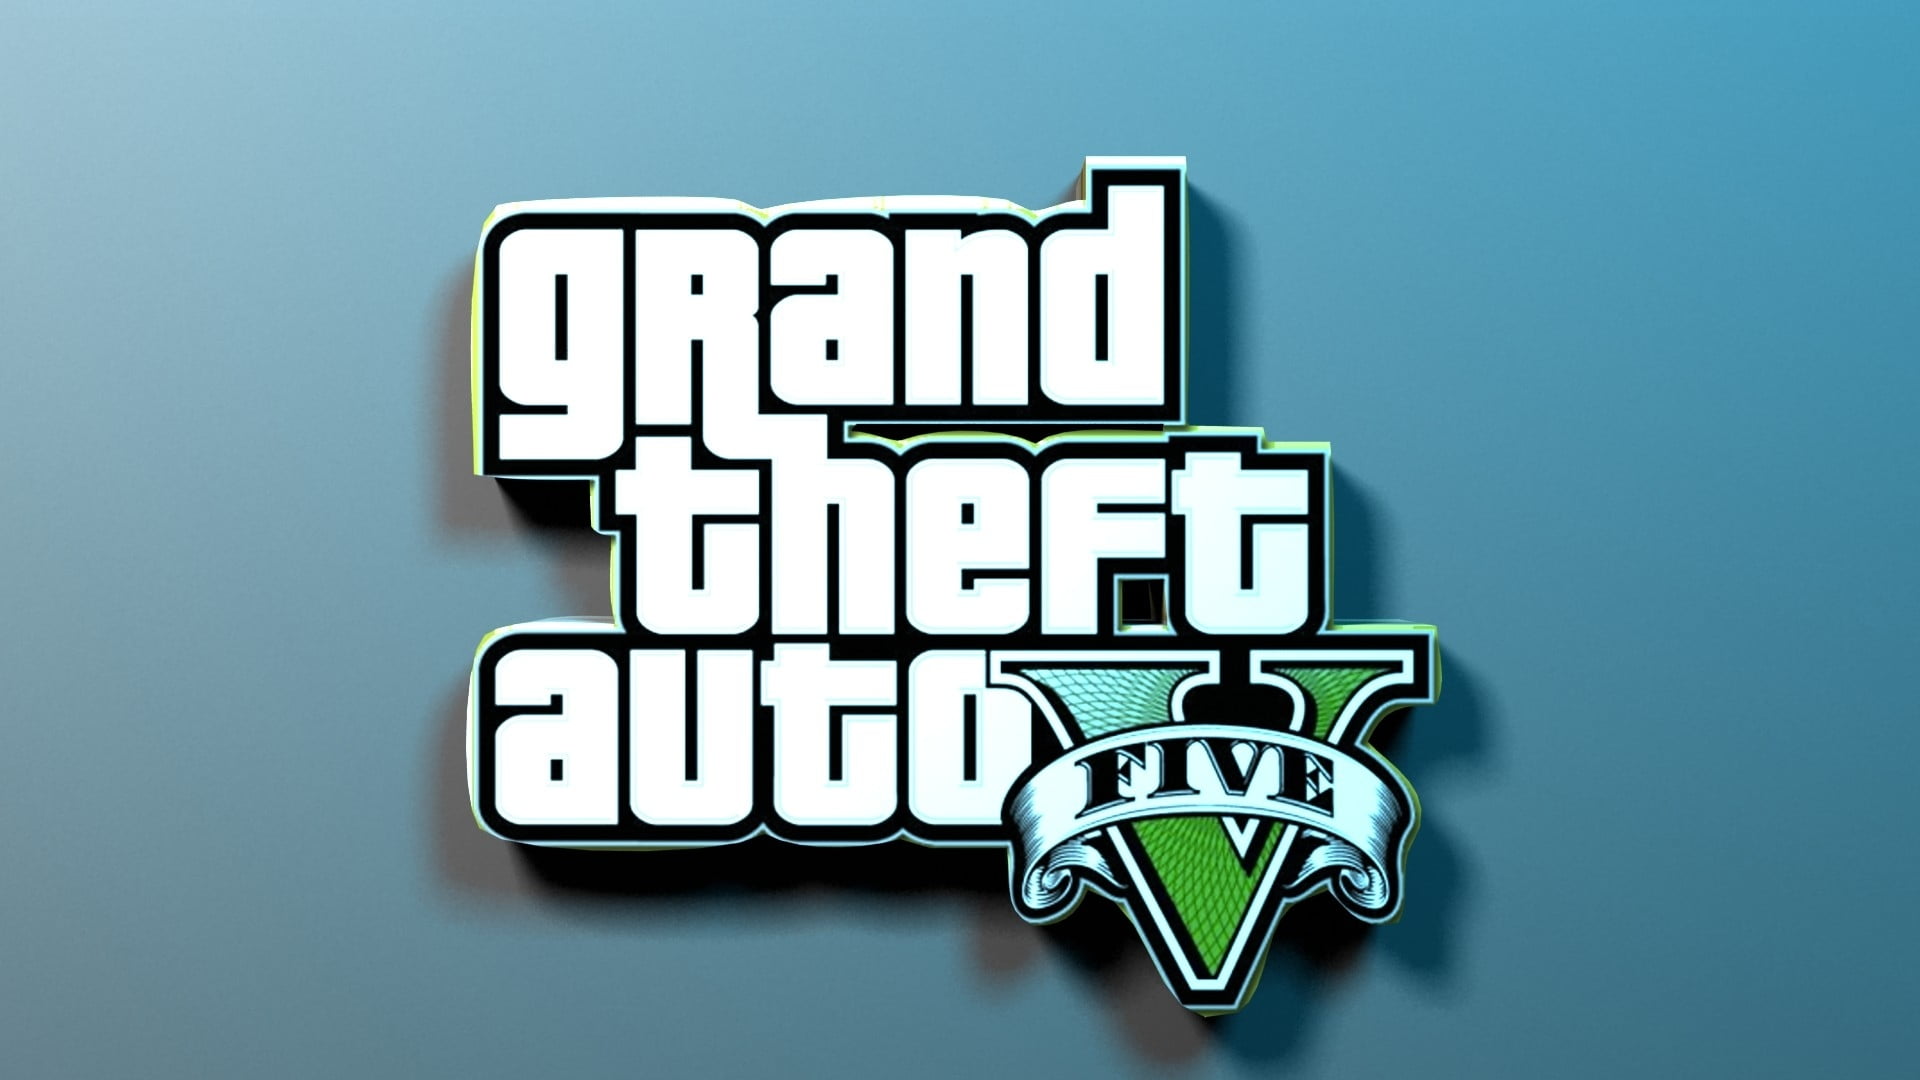 Grand Theft Auto Five logo